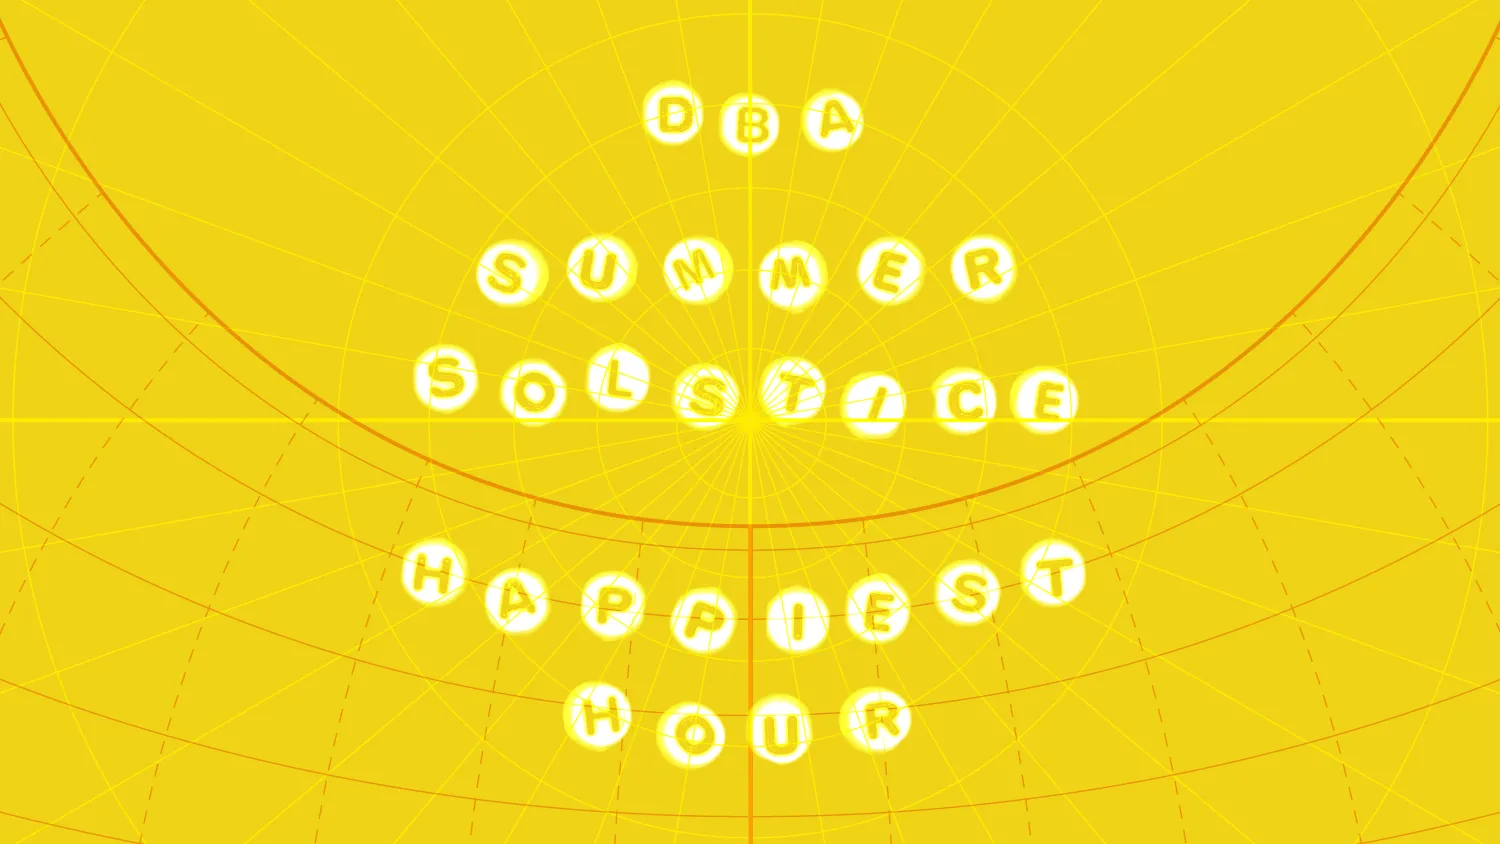 "DBA Summer Solstice Happiest Hour" yellow background